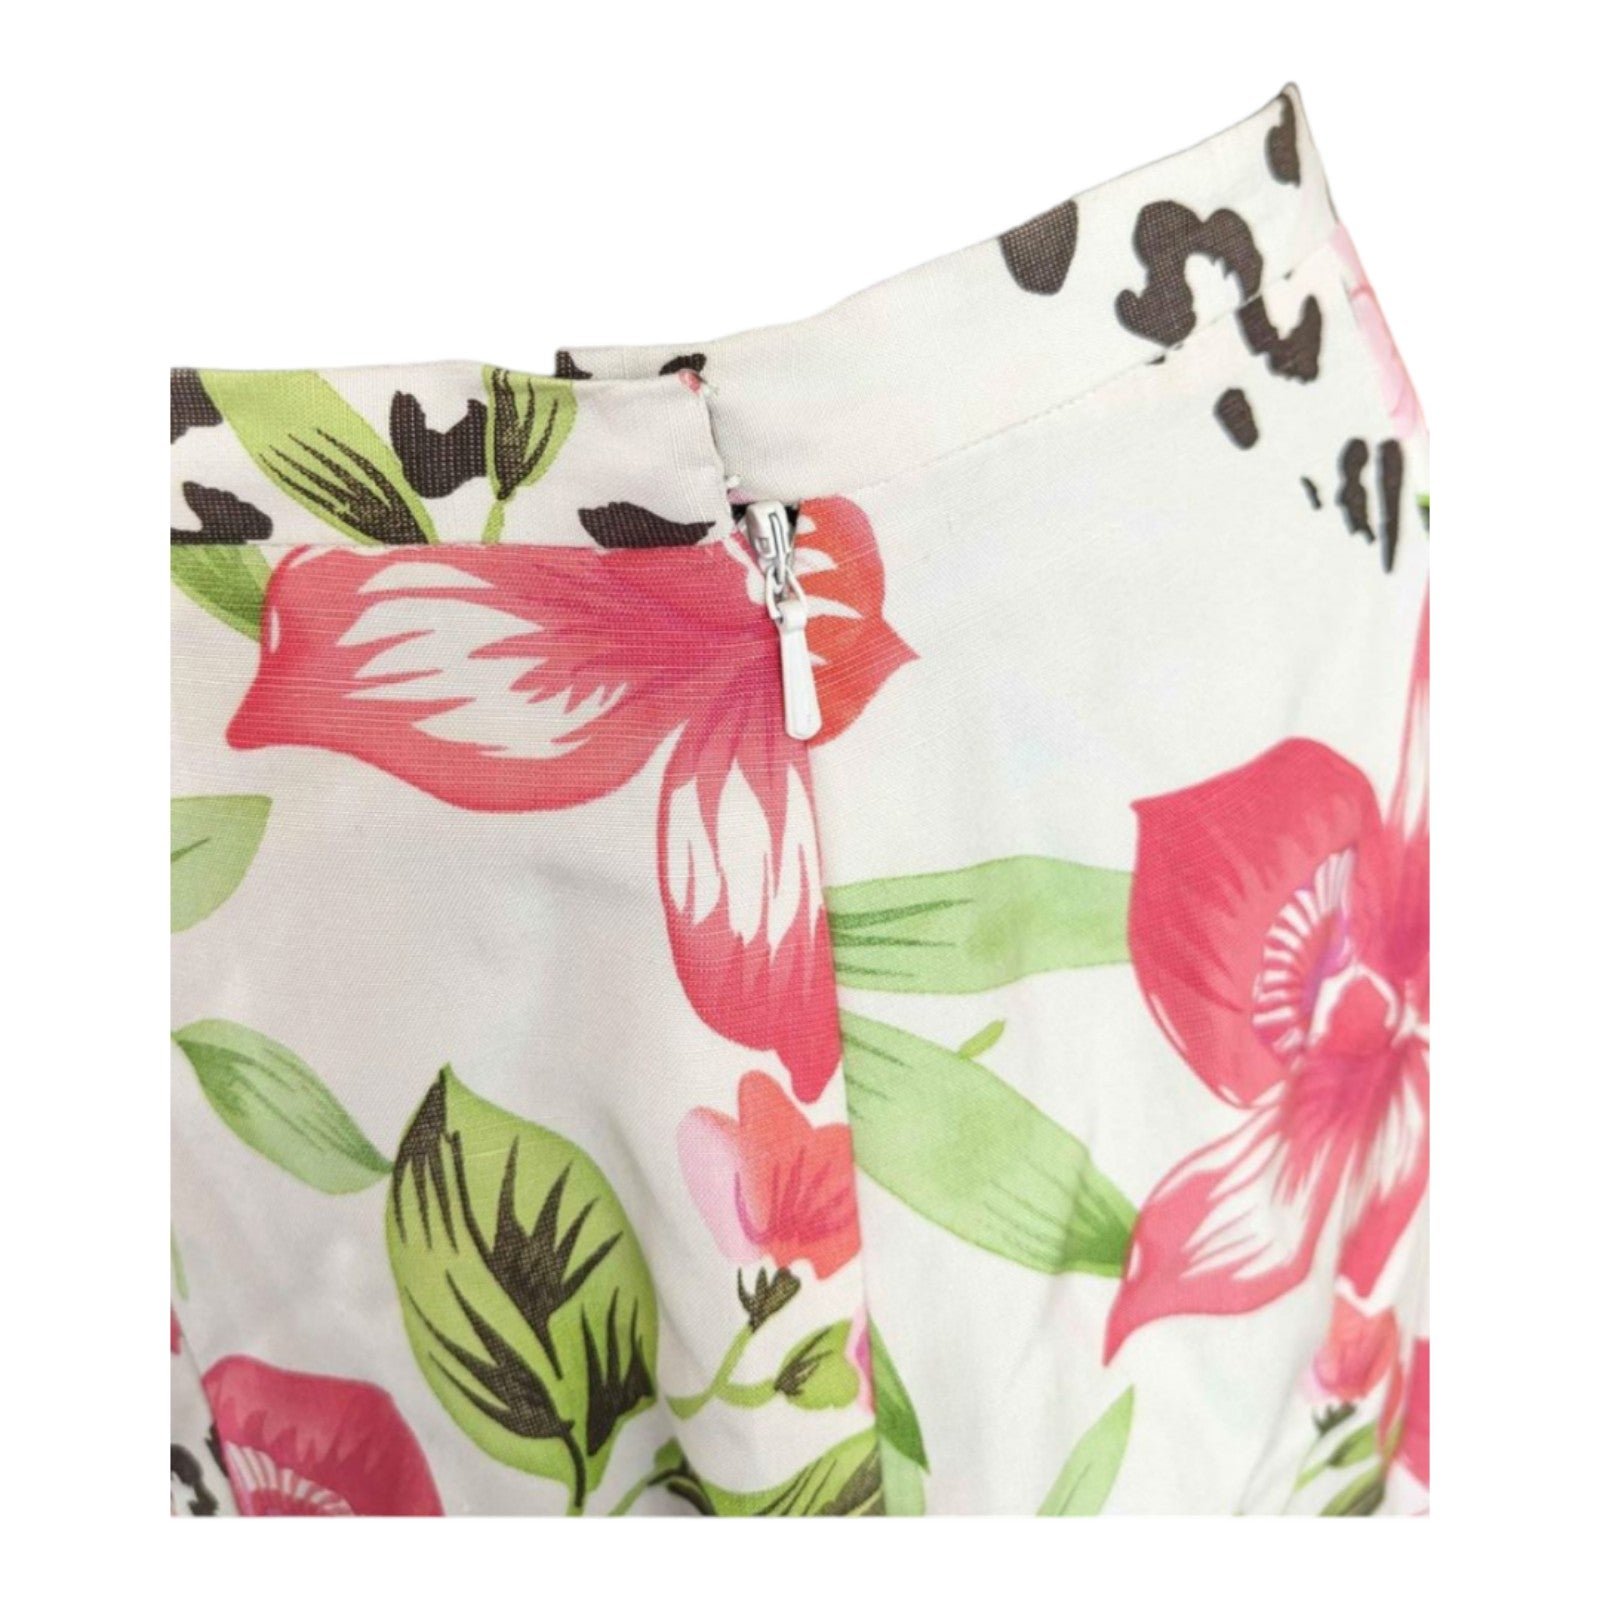 Harold´s Silk And Linen Pink Hibiscus And Cheetah Print Maxi Skirt f4oStdg9B